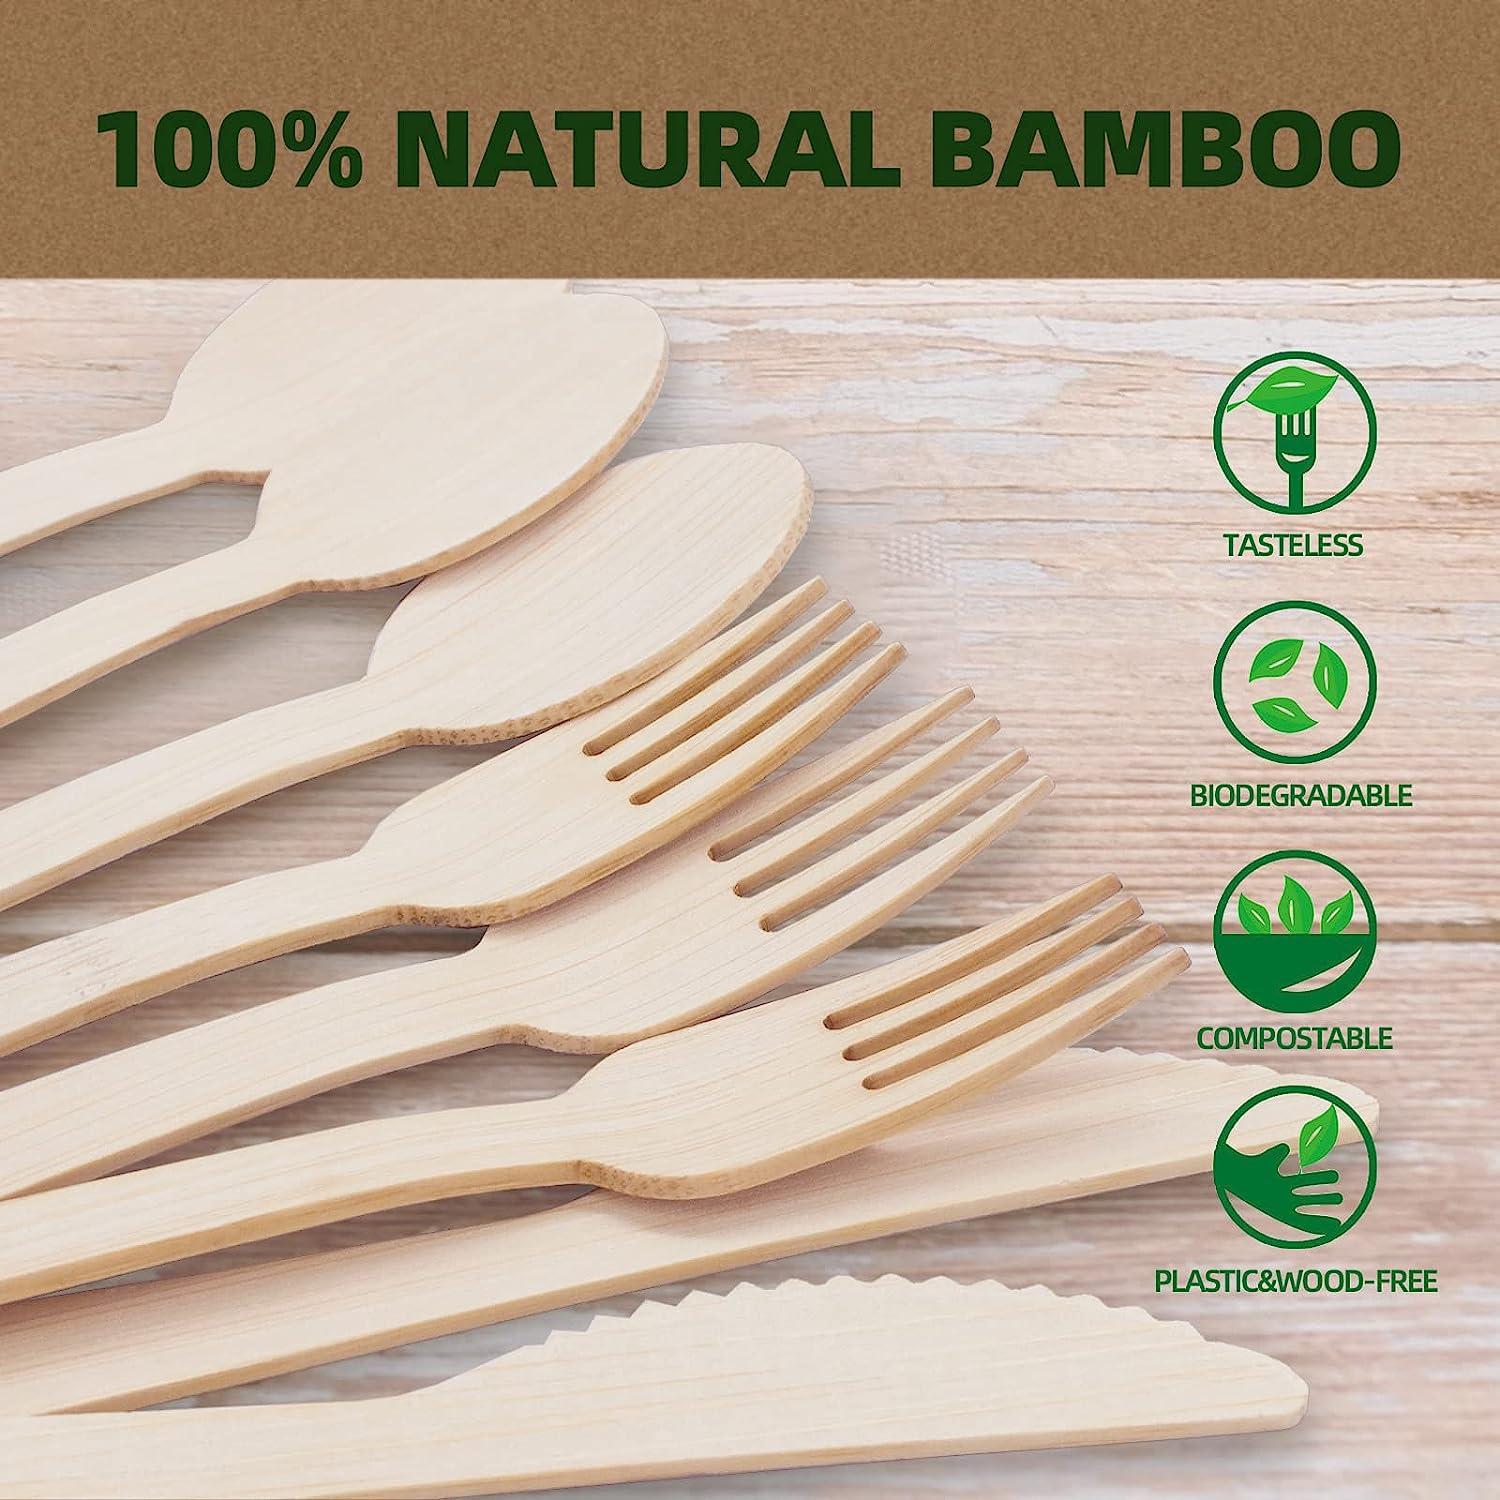 Bamboo, Organic Kids Products & Kid Utensils